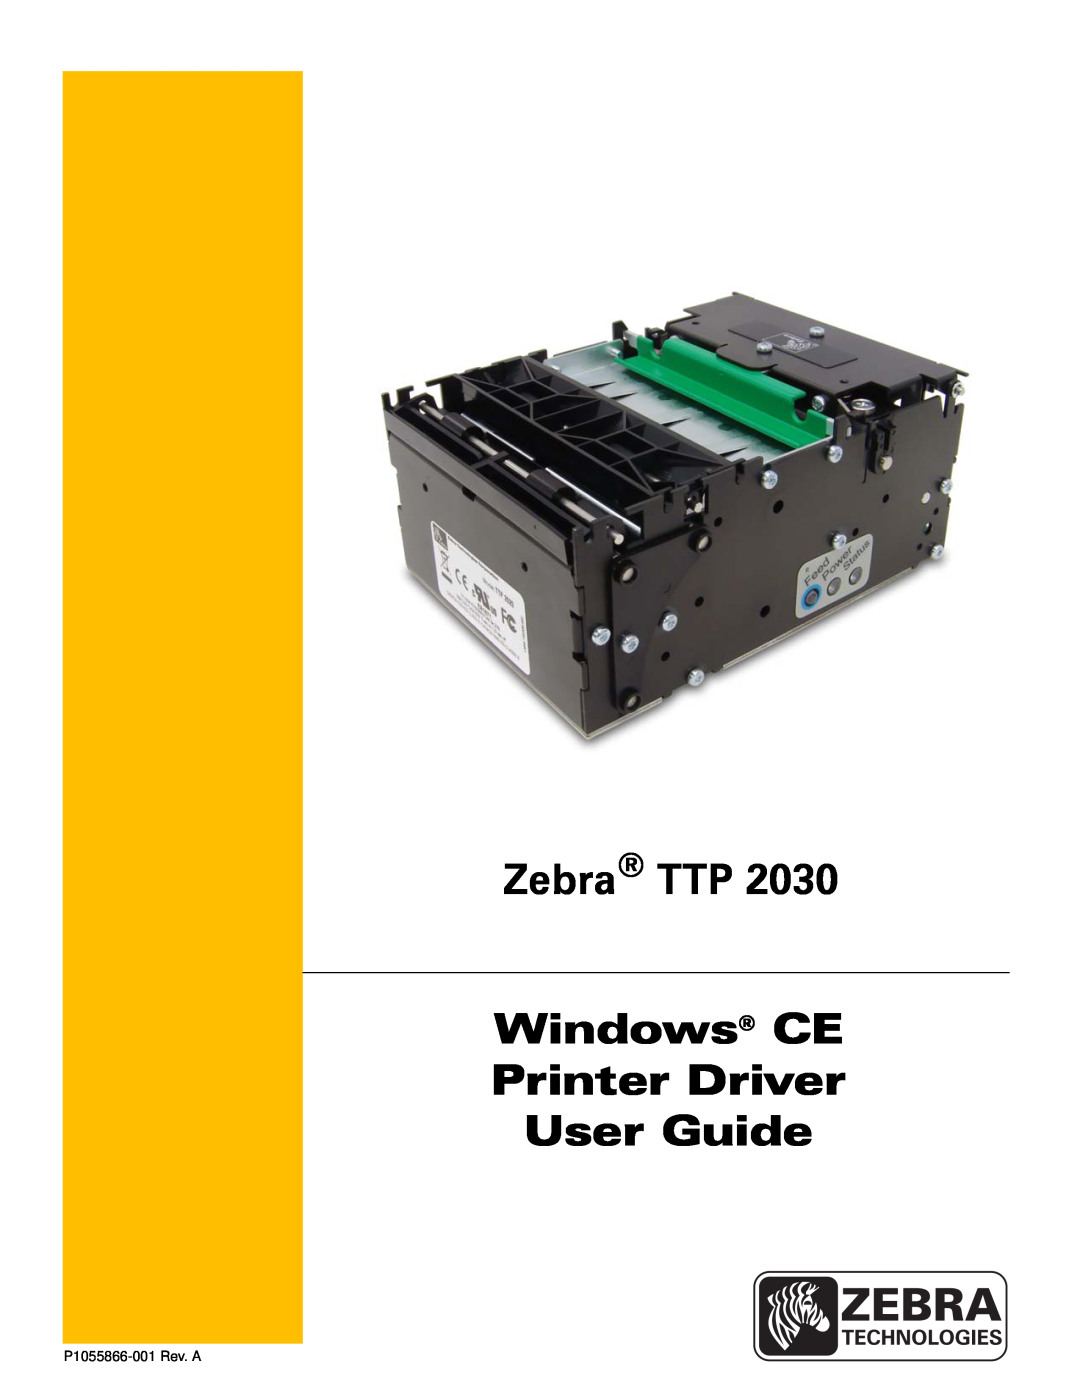 Zebra Technologies TTP 2030 manual Zebra TTP, Windows CE Printer Driver User Guide, P1055866-001 Rev. A 